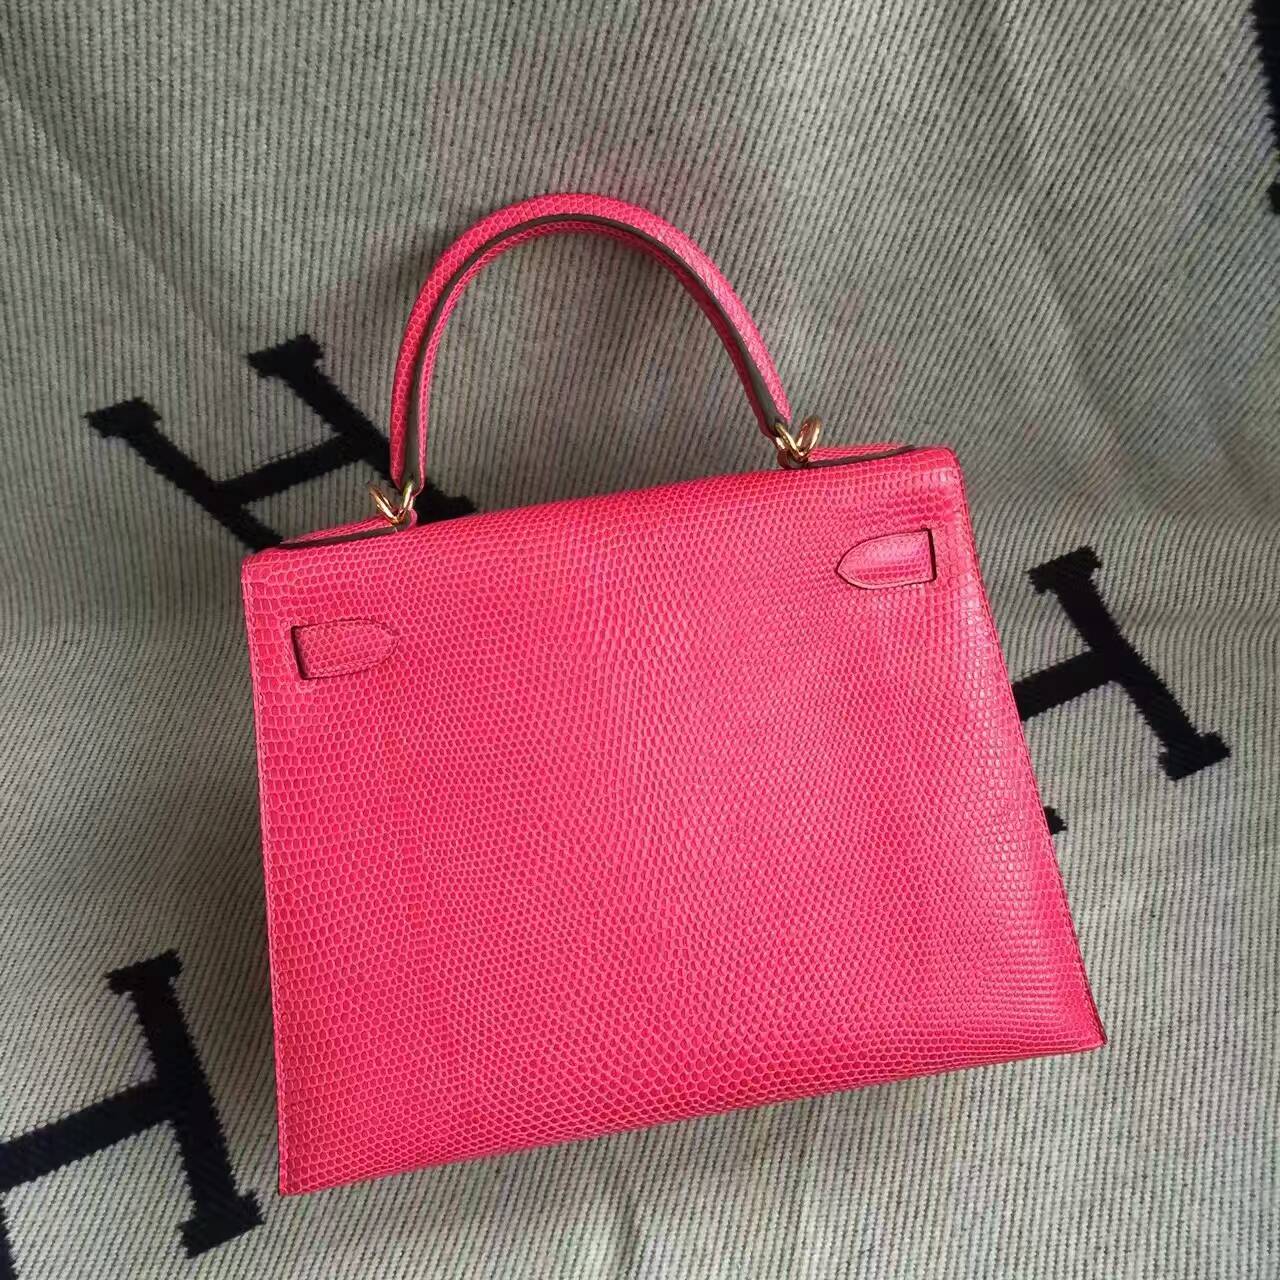 Wholesale Hermes Sellier Kelly Bag28CM in Hot Pink Lizard Leather